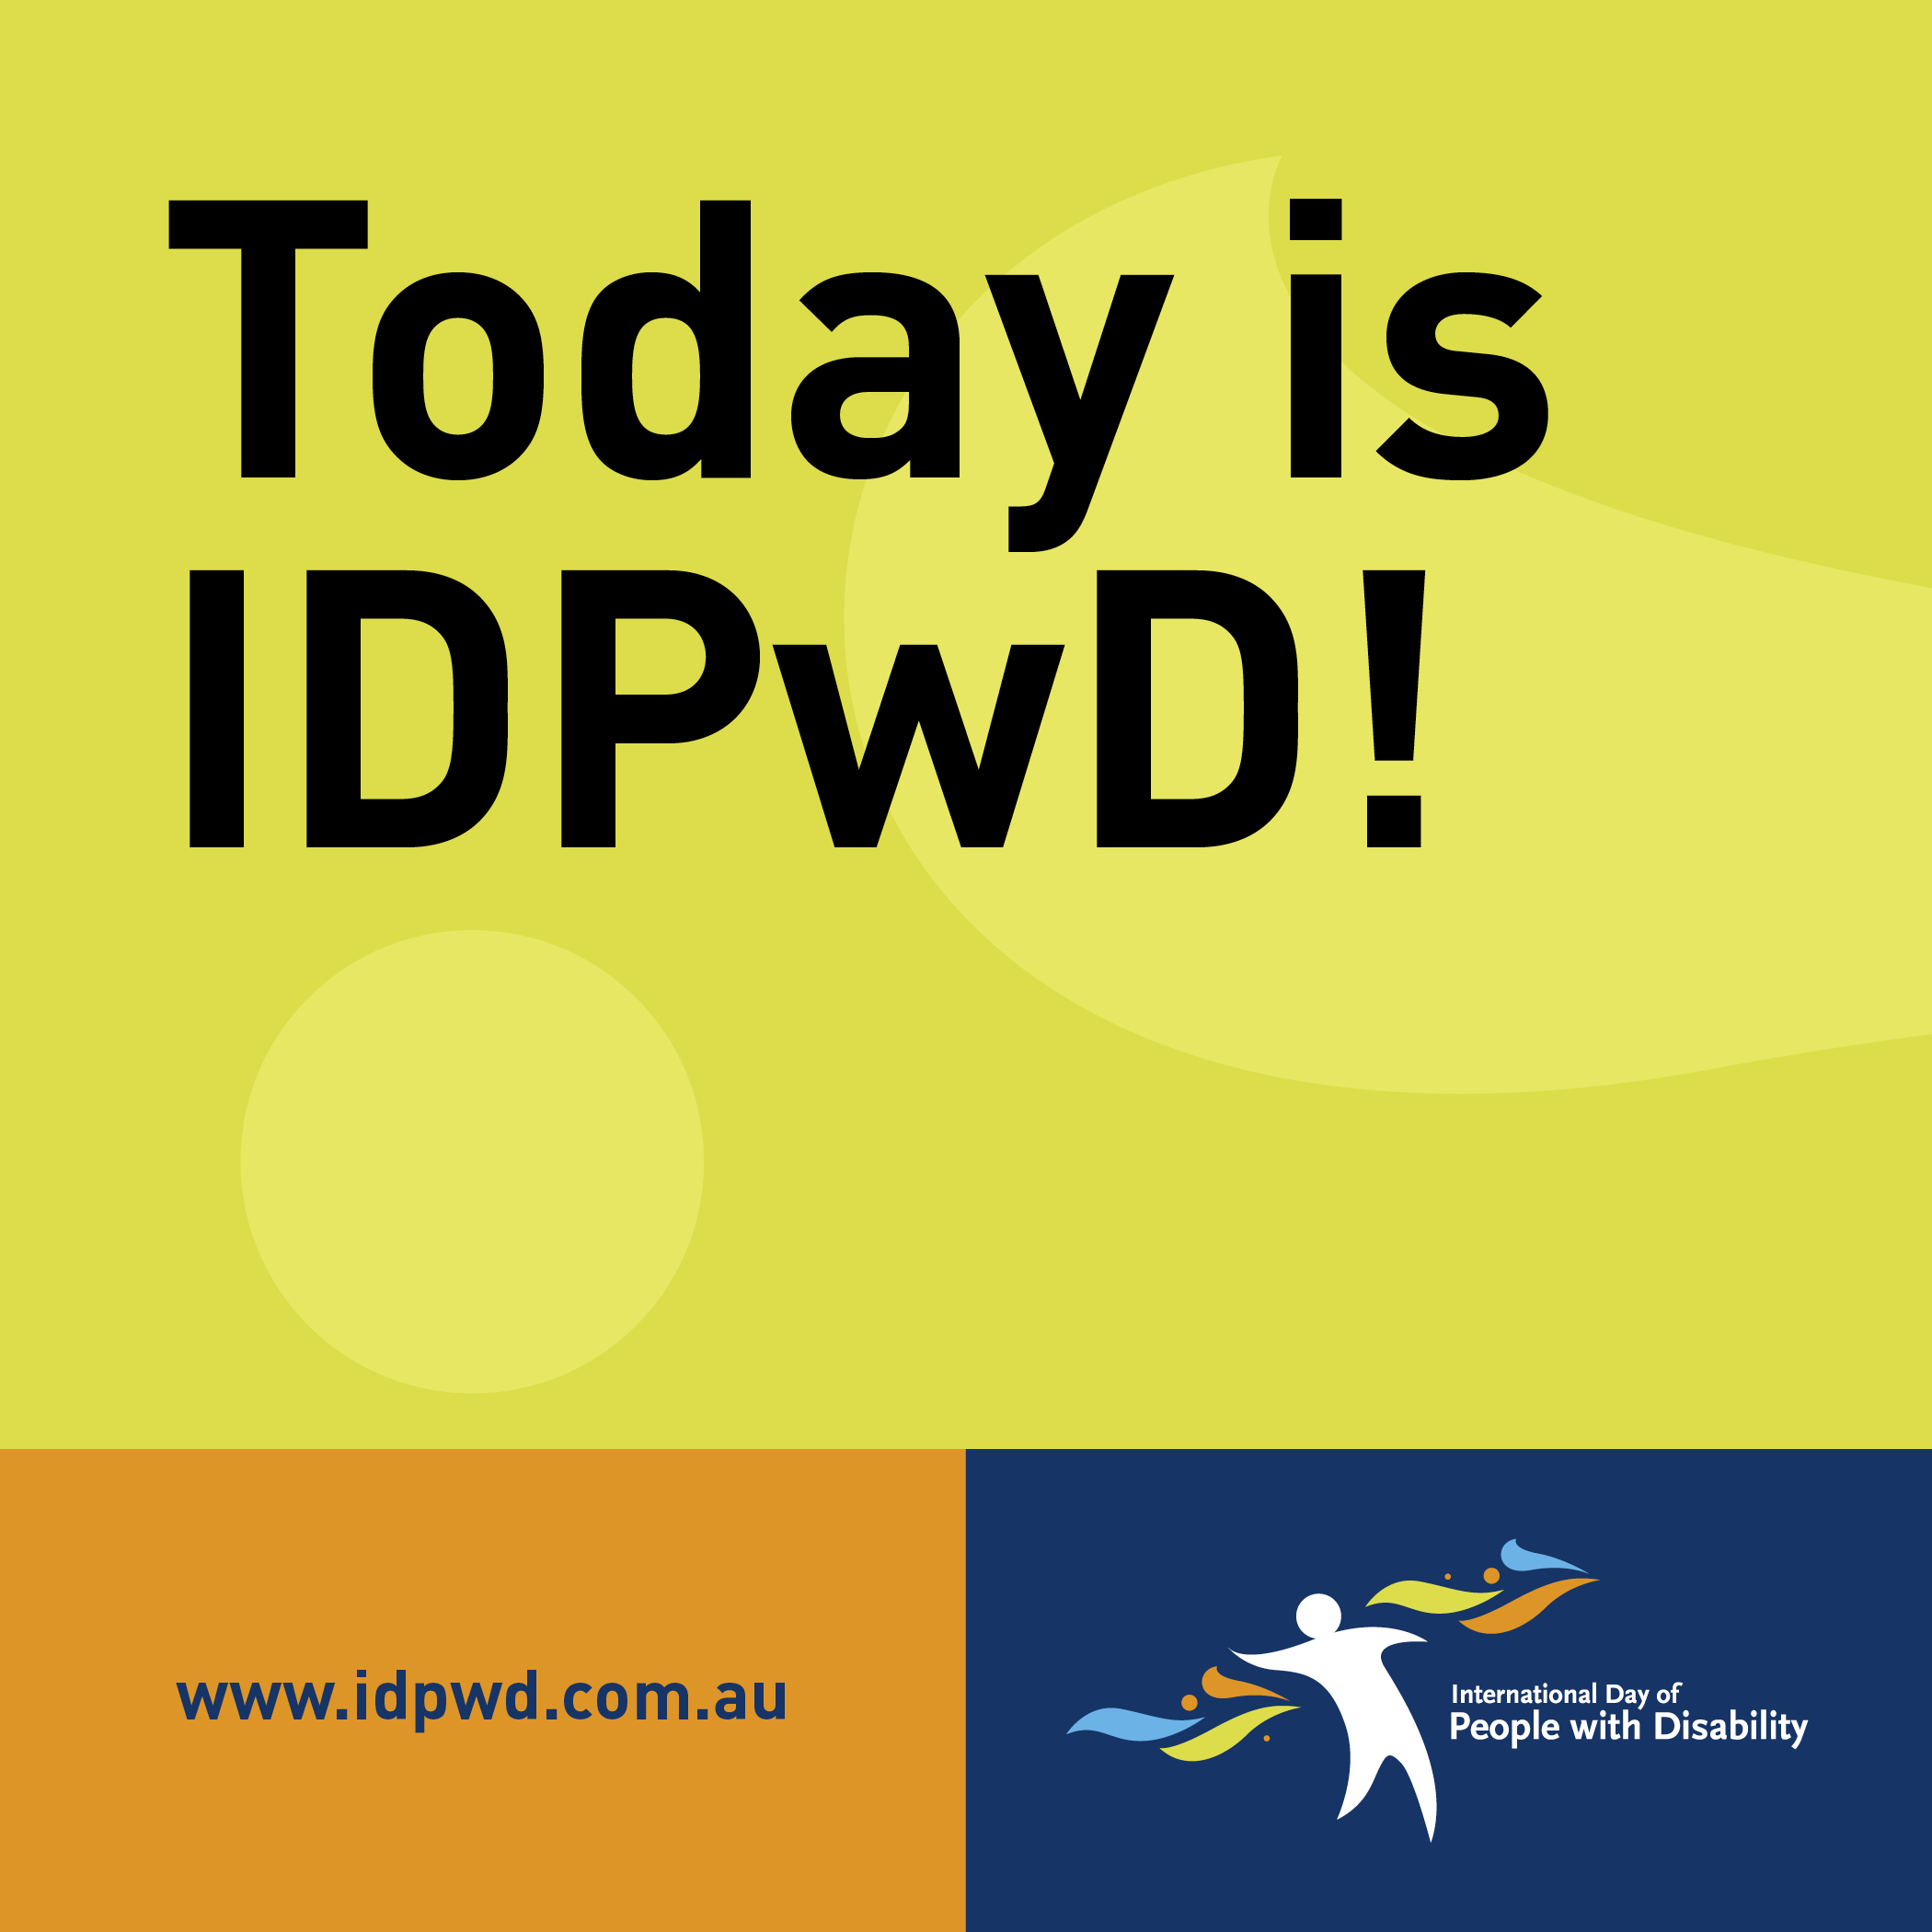 IDPwD - Today